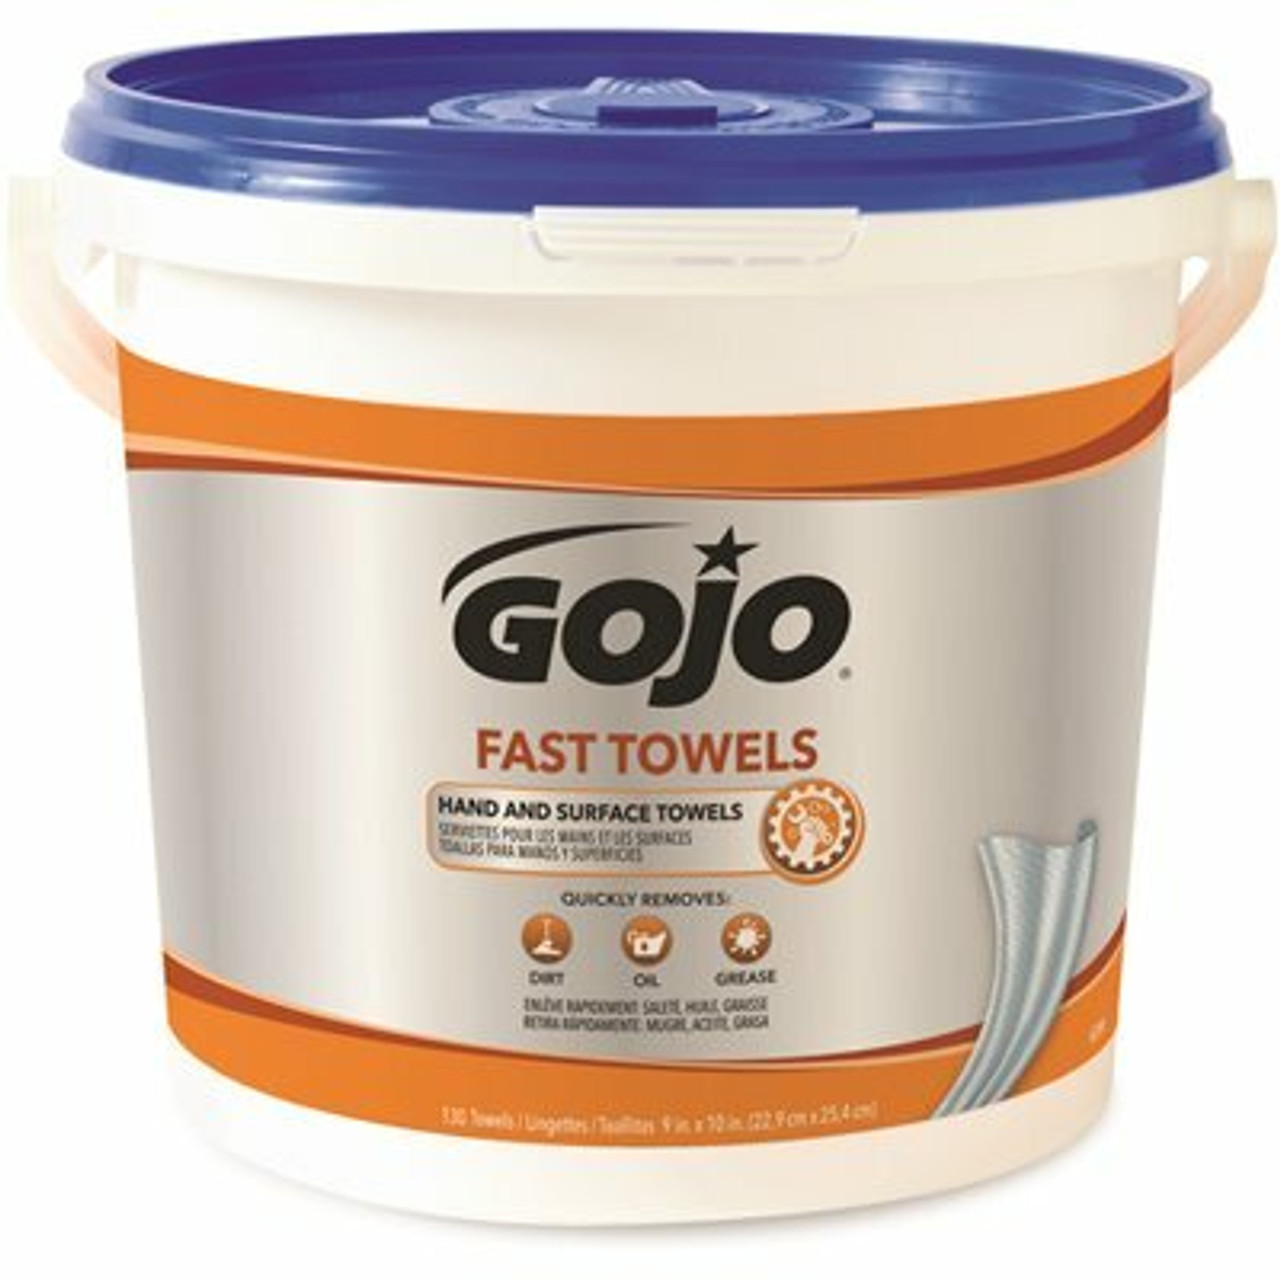 Gojo Fast Towels, Fresh Citrus Scent, Multi-Purpose Heavy Duty Textured Wet Towels Bucket (130-Count)